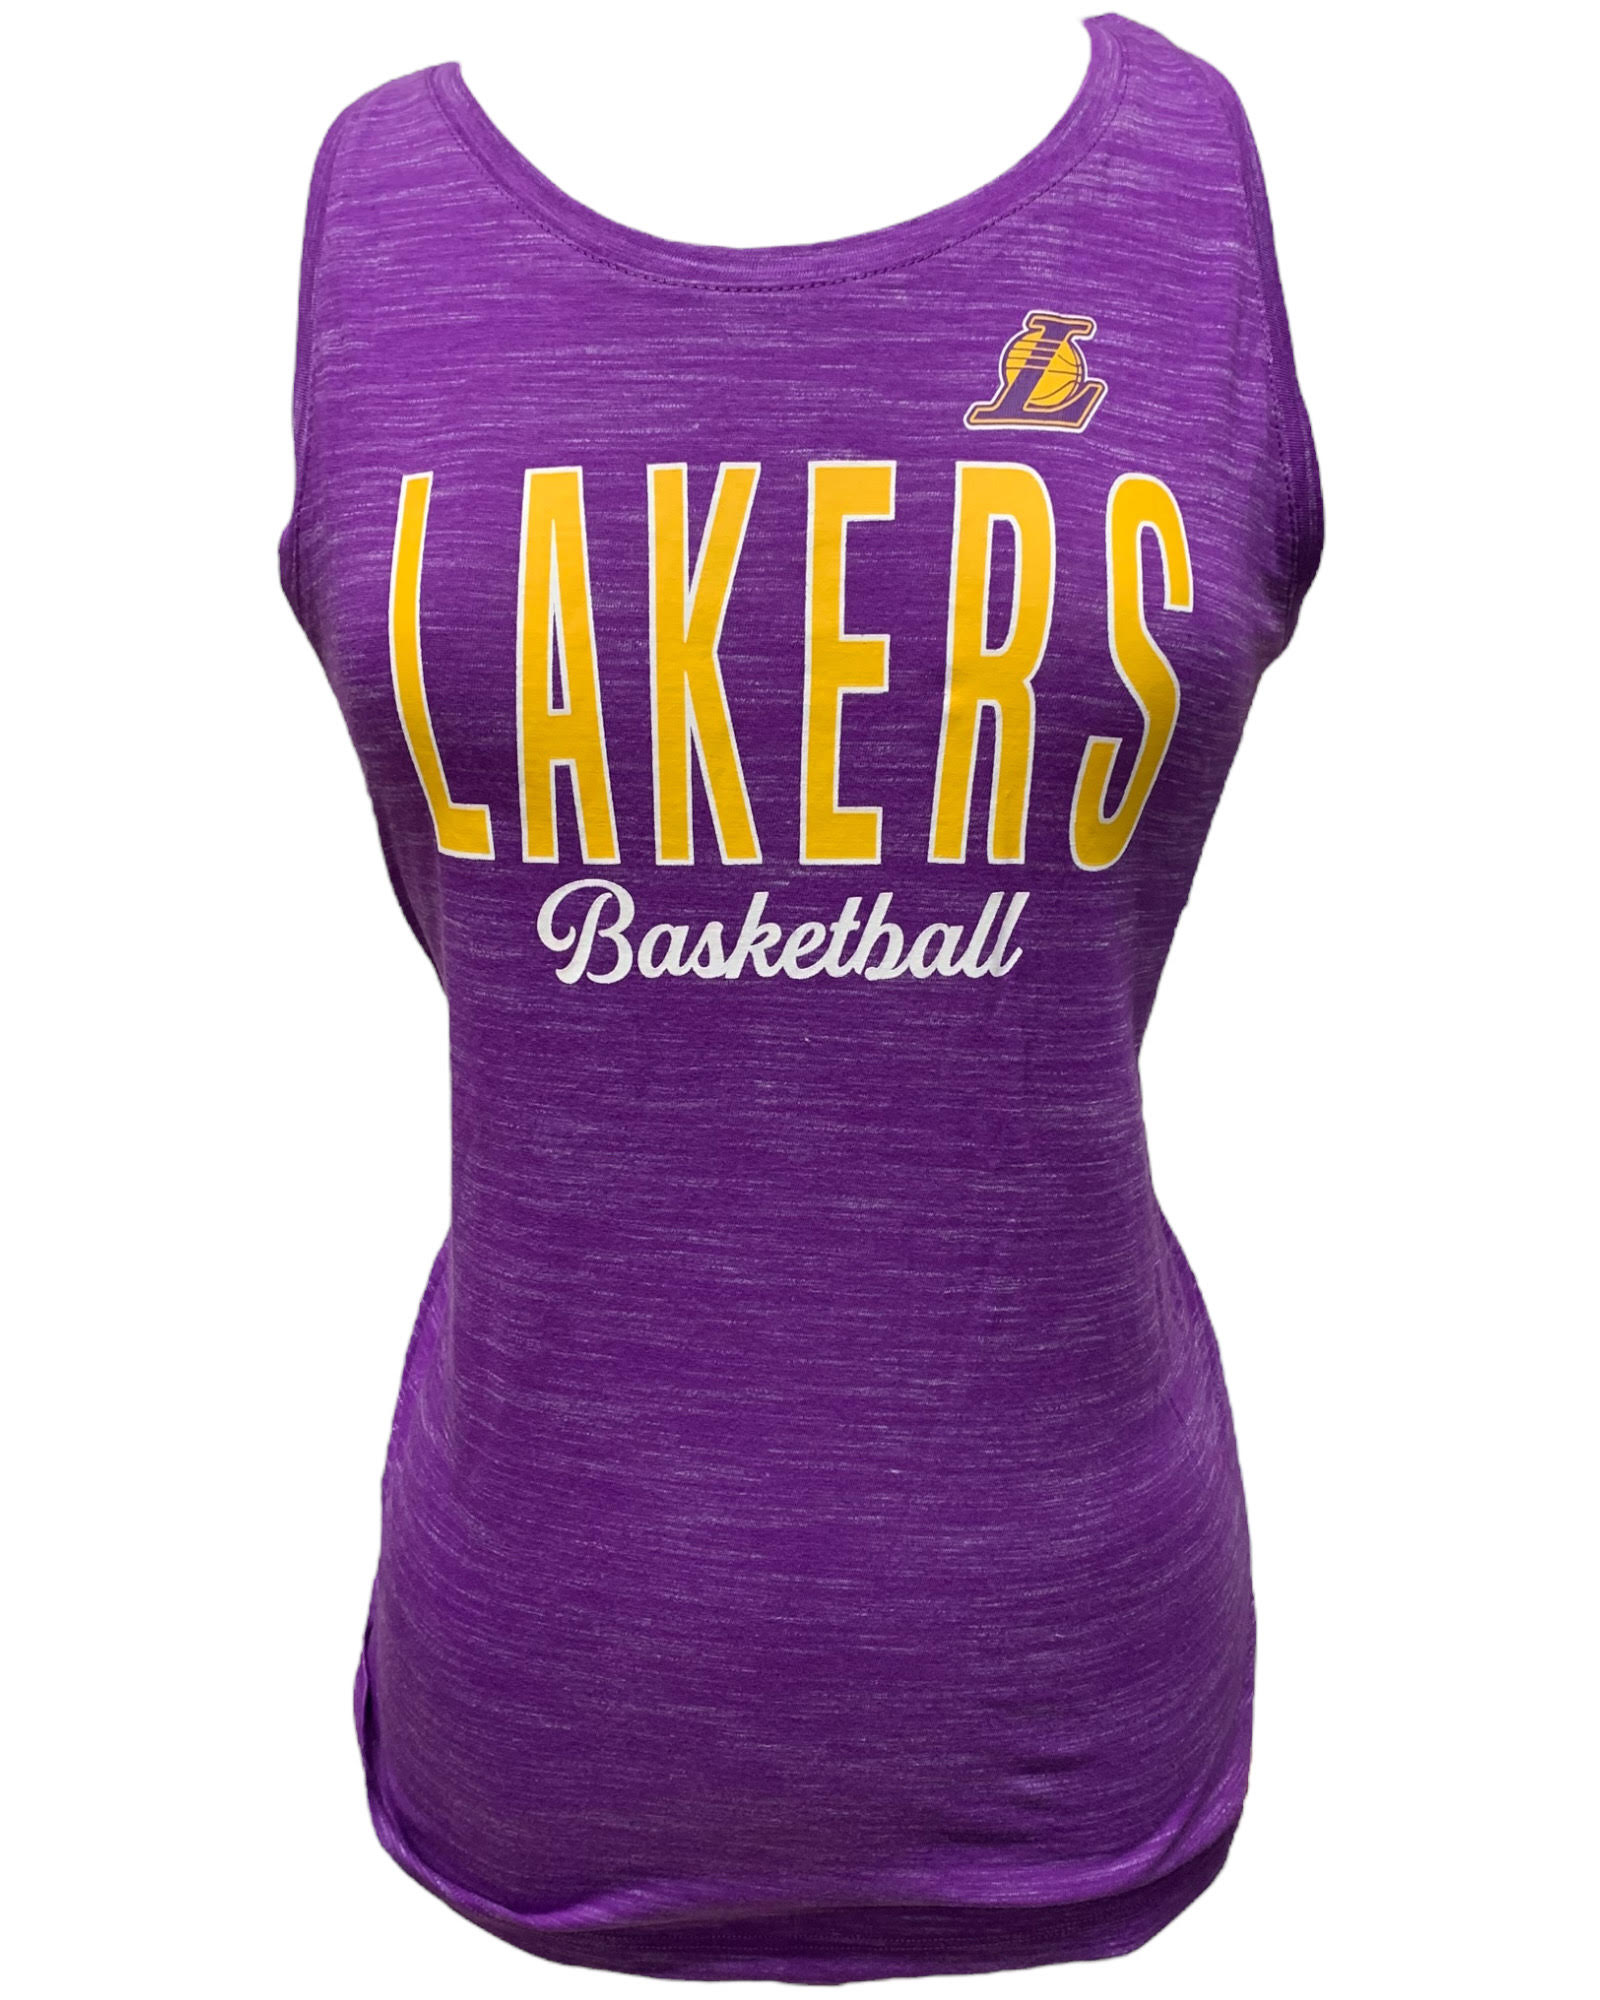 Los Angeles Lakers Tank Tops, Lakers Sleeveless Shirts